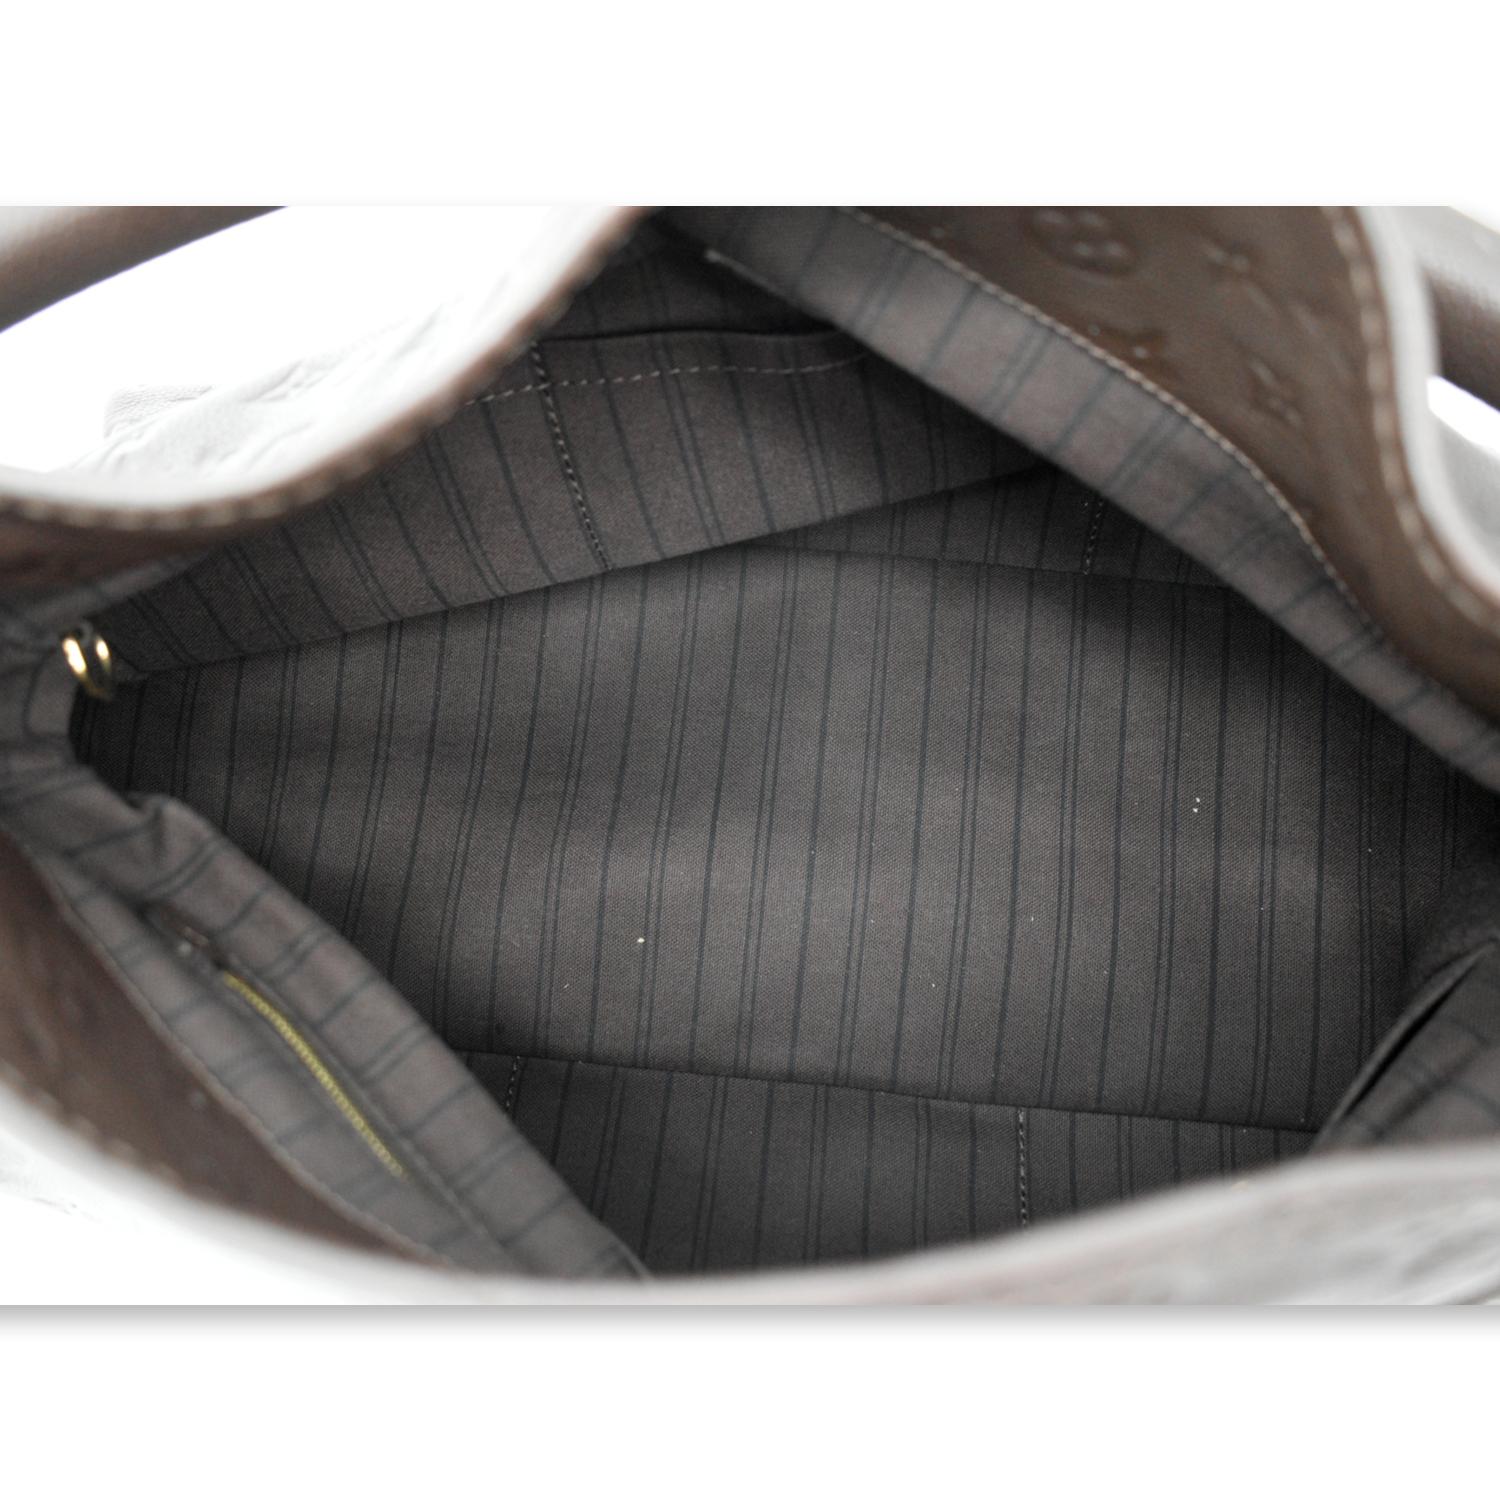 Louis Vuitton Empreinte Aube Artsy Mm Shoulder Bag 22% off retail